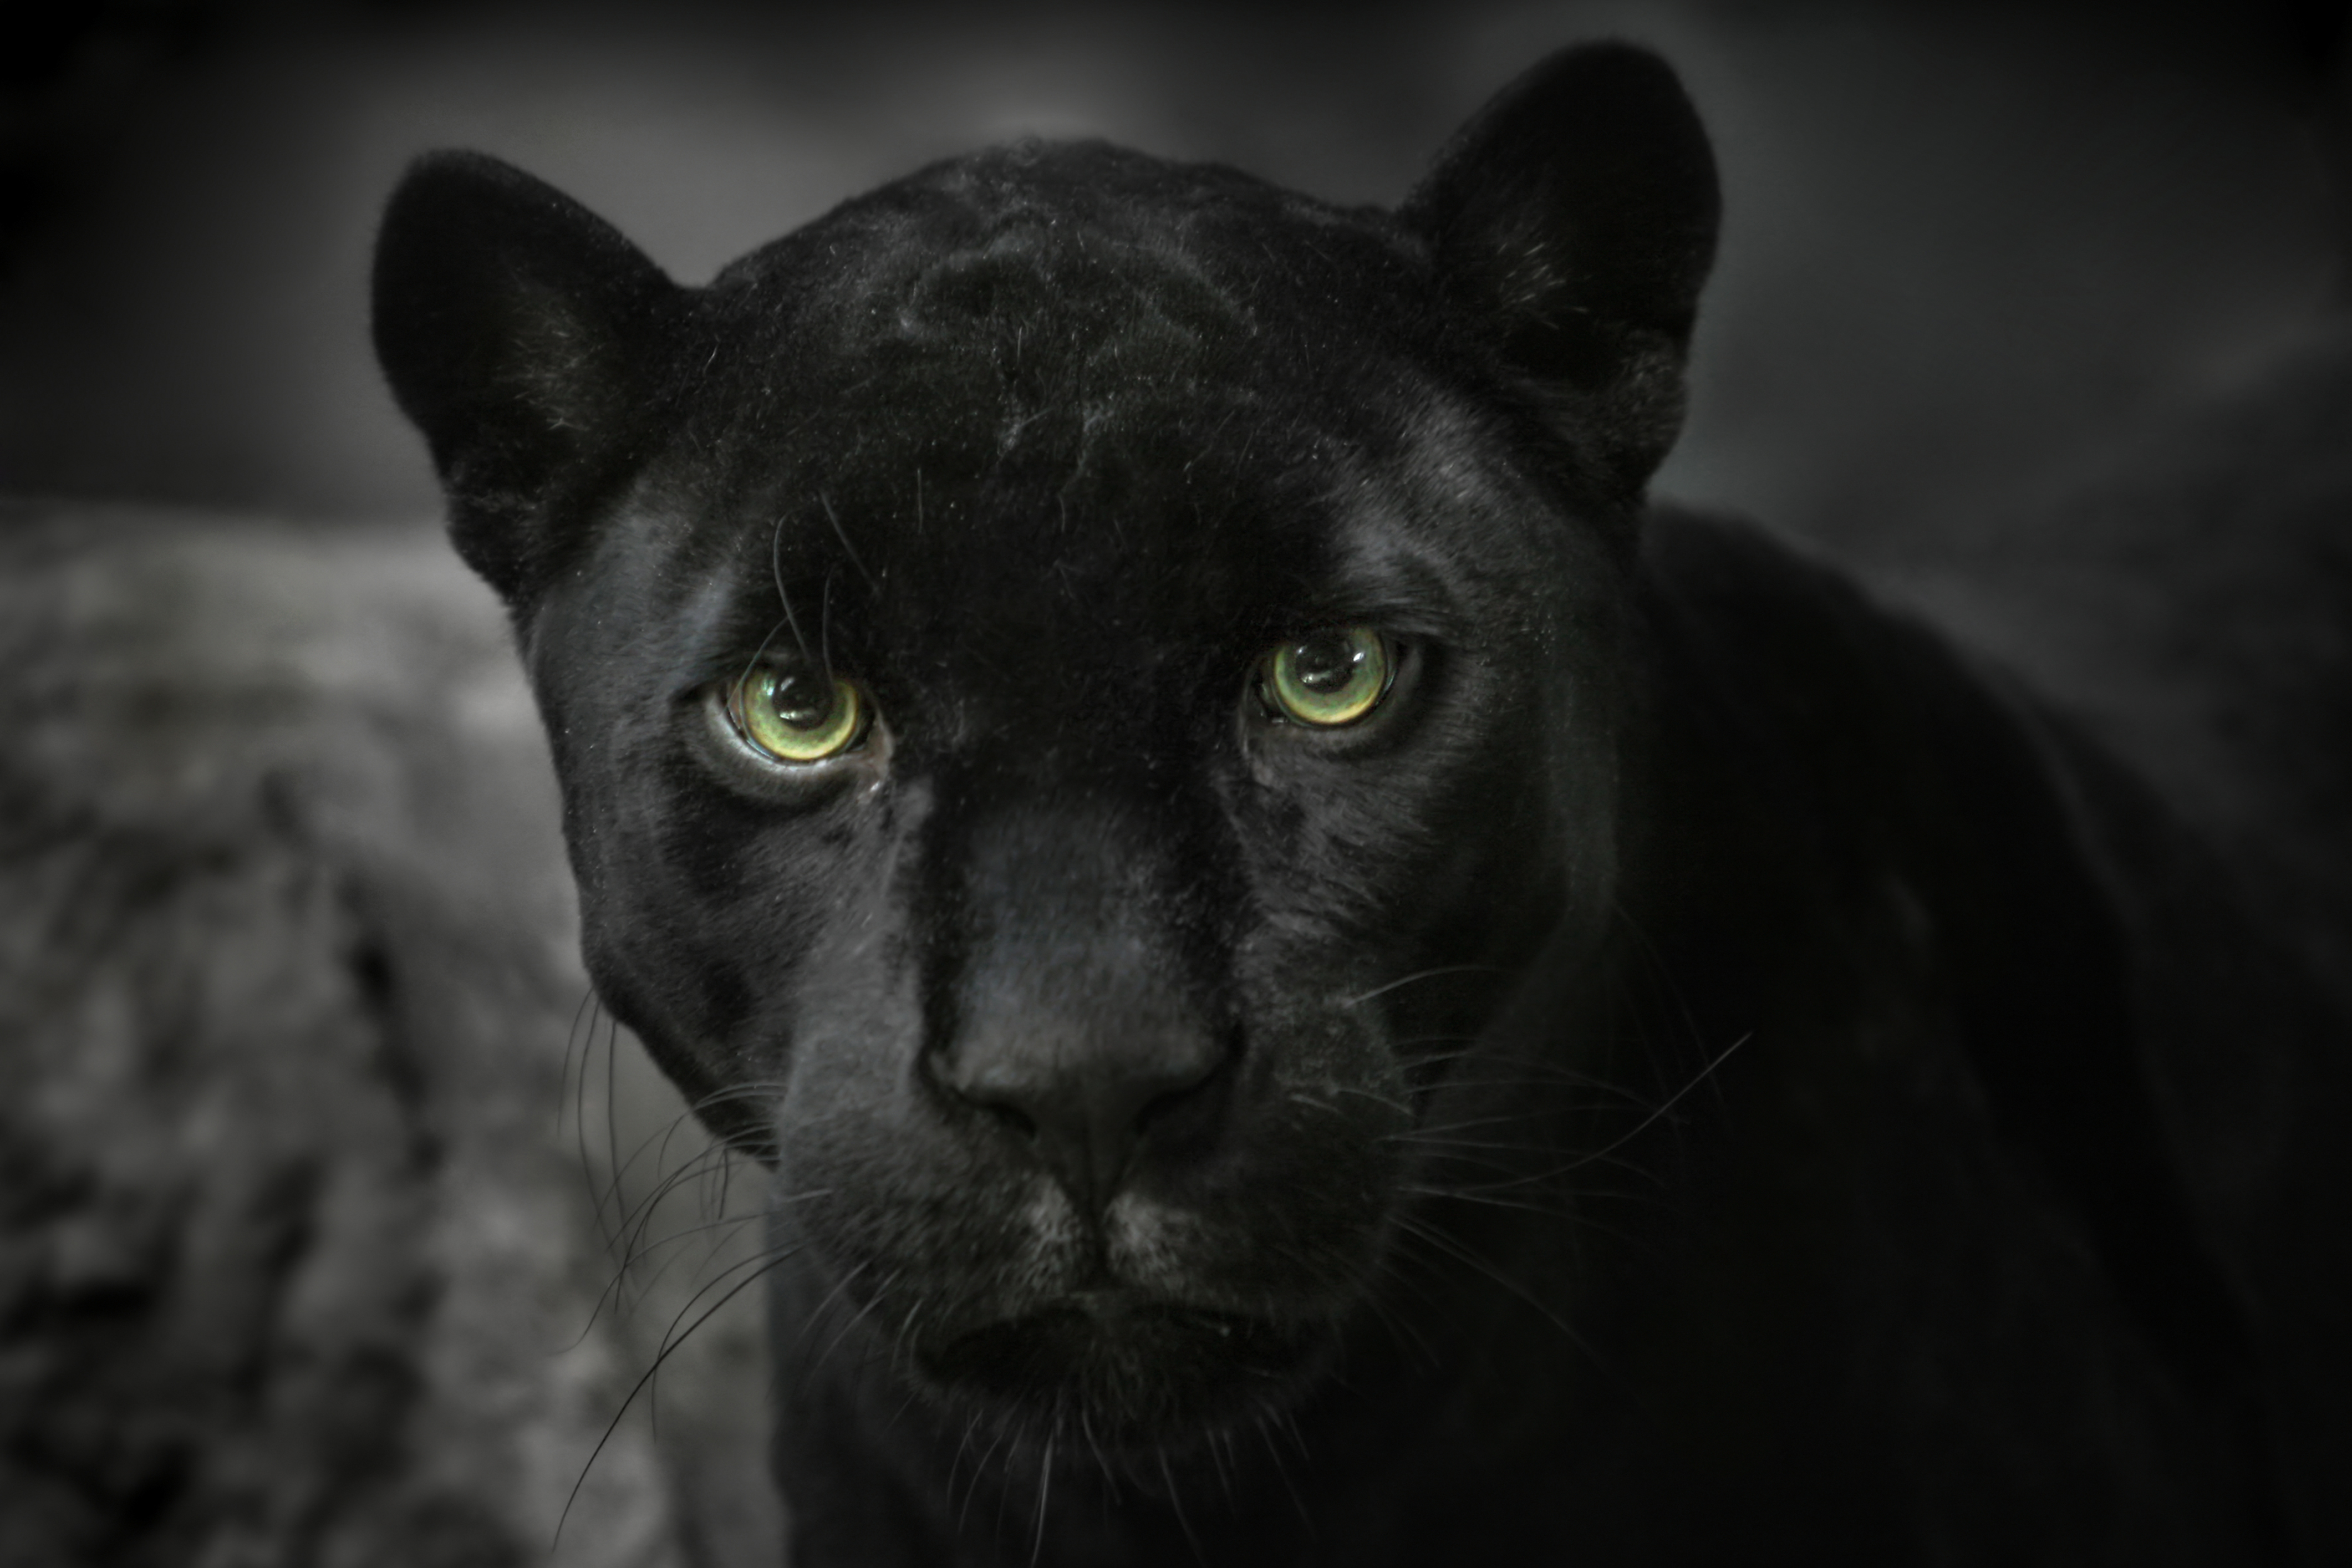 Black Panther 4k Ultra HD Wallpaper